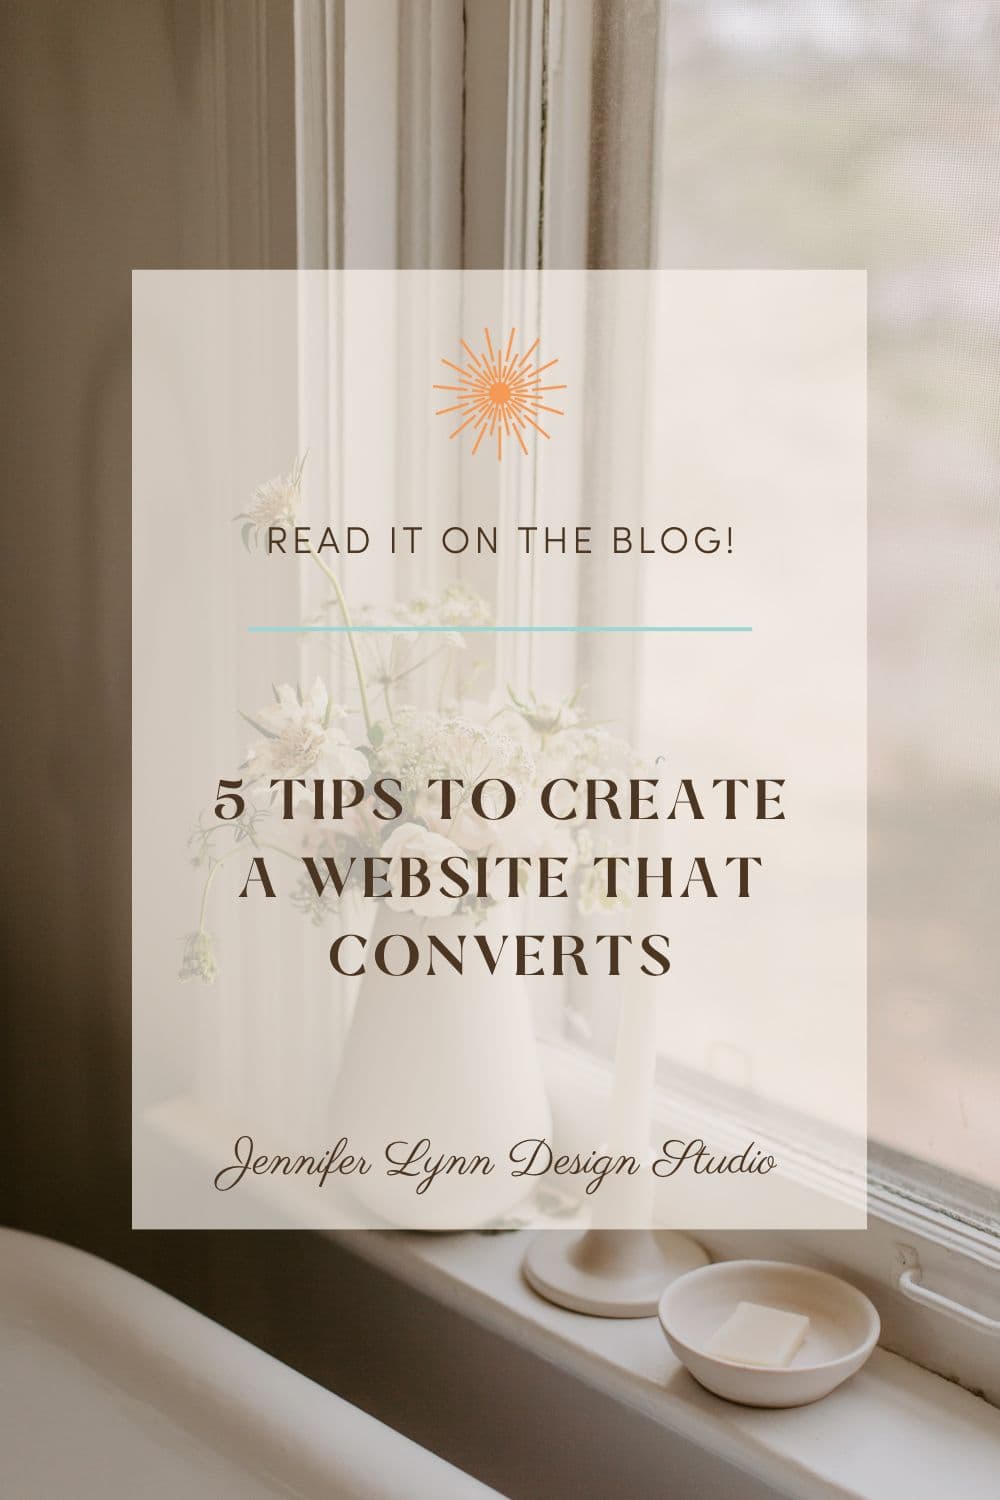 5 Tips to Create a Website That Converts by Jennifer Lynn Design Studio